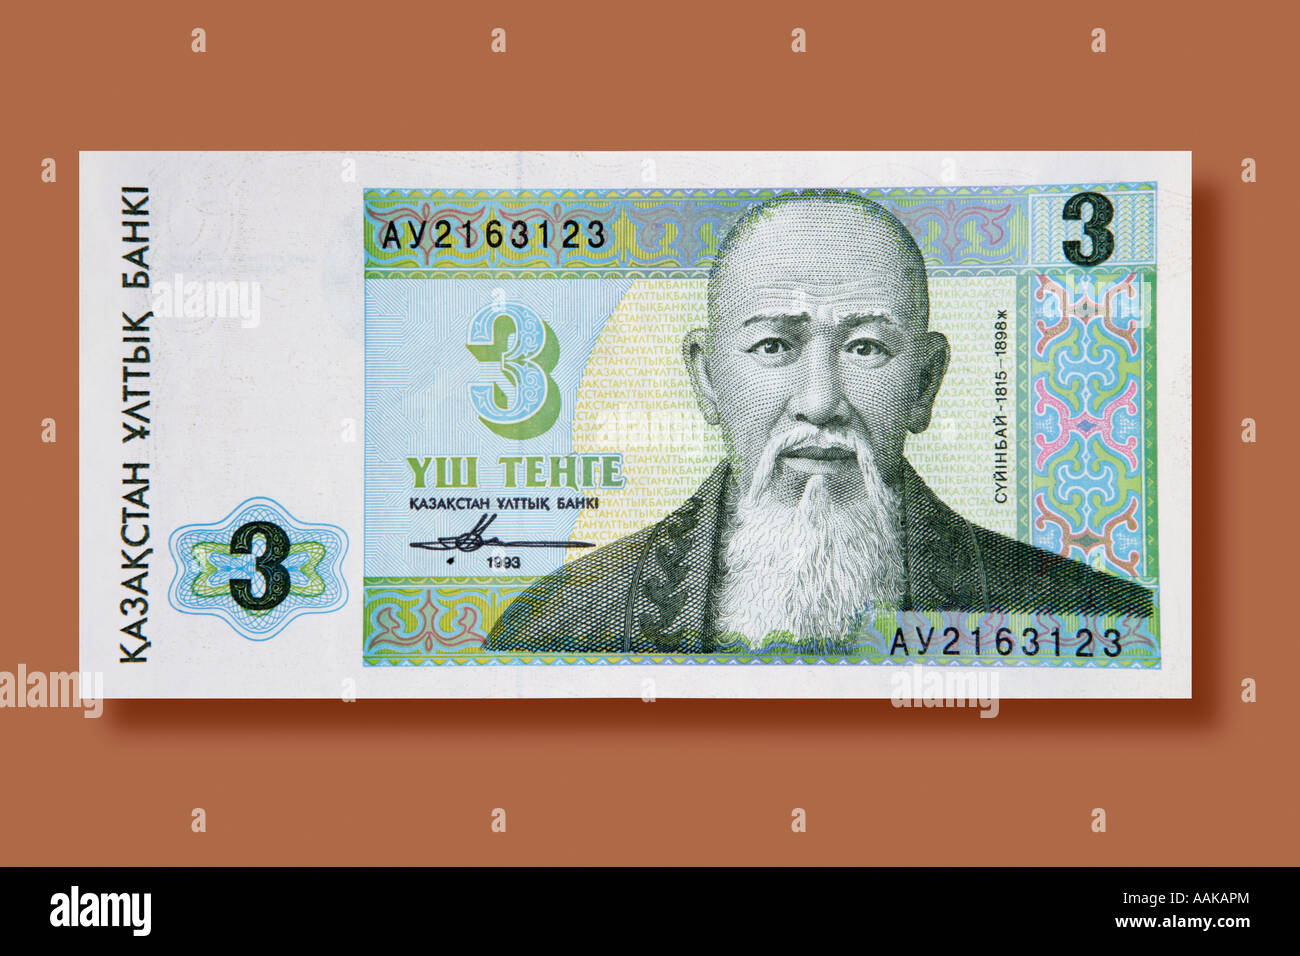 3 Tenge note paper money from Kazakhstan Stock Photo